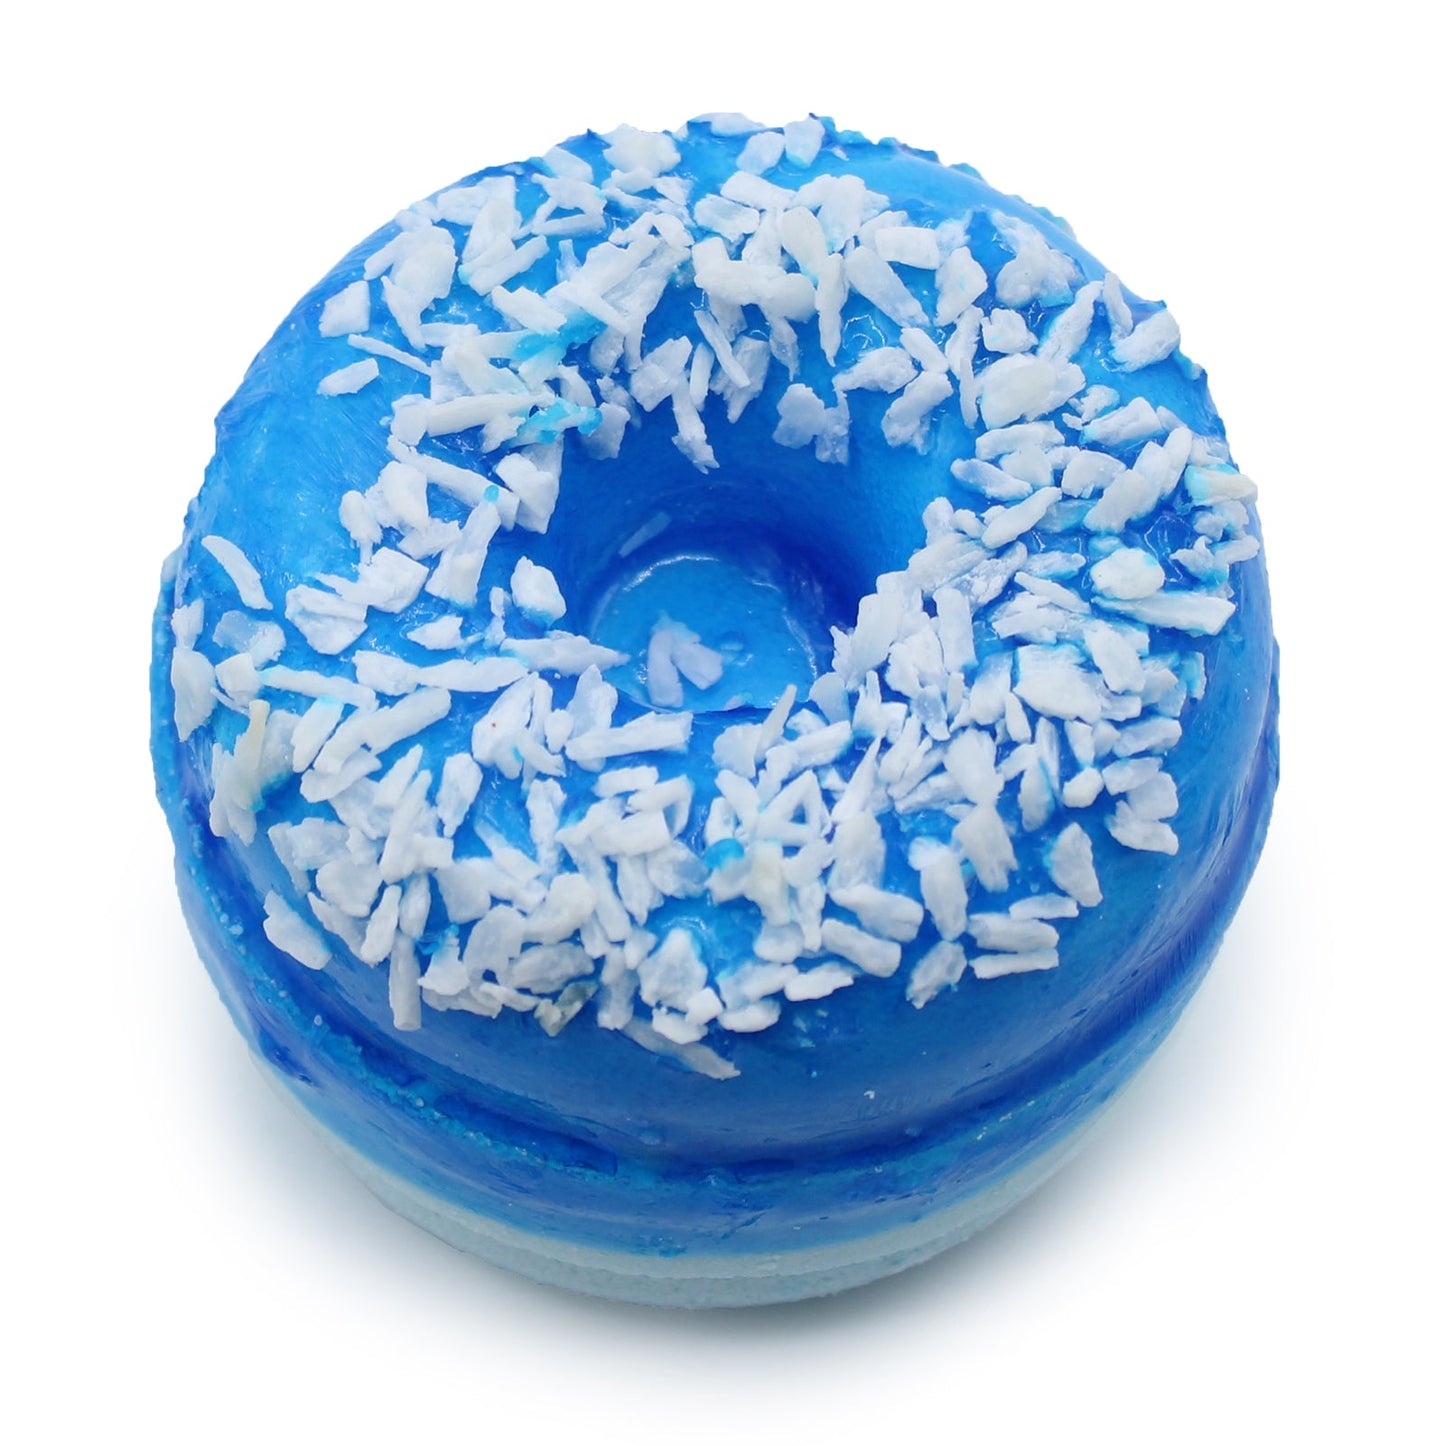 Blueberry Bath Donut